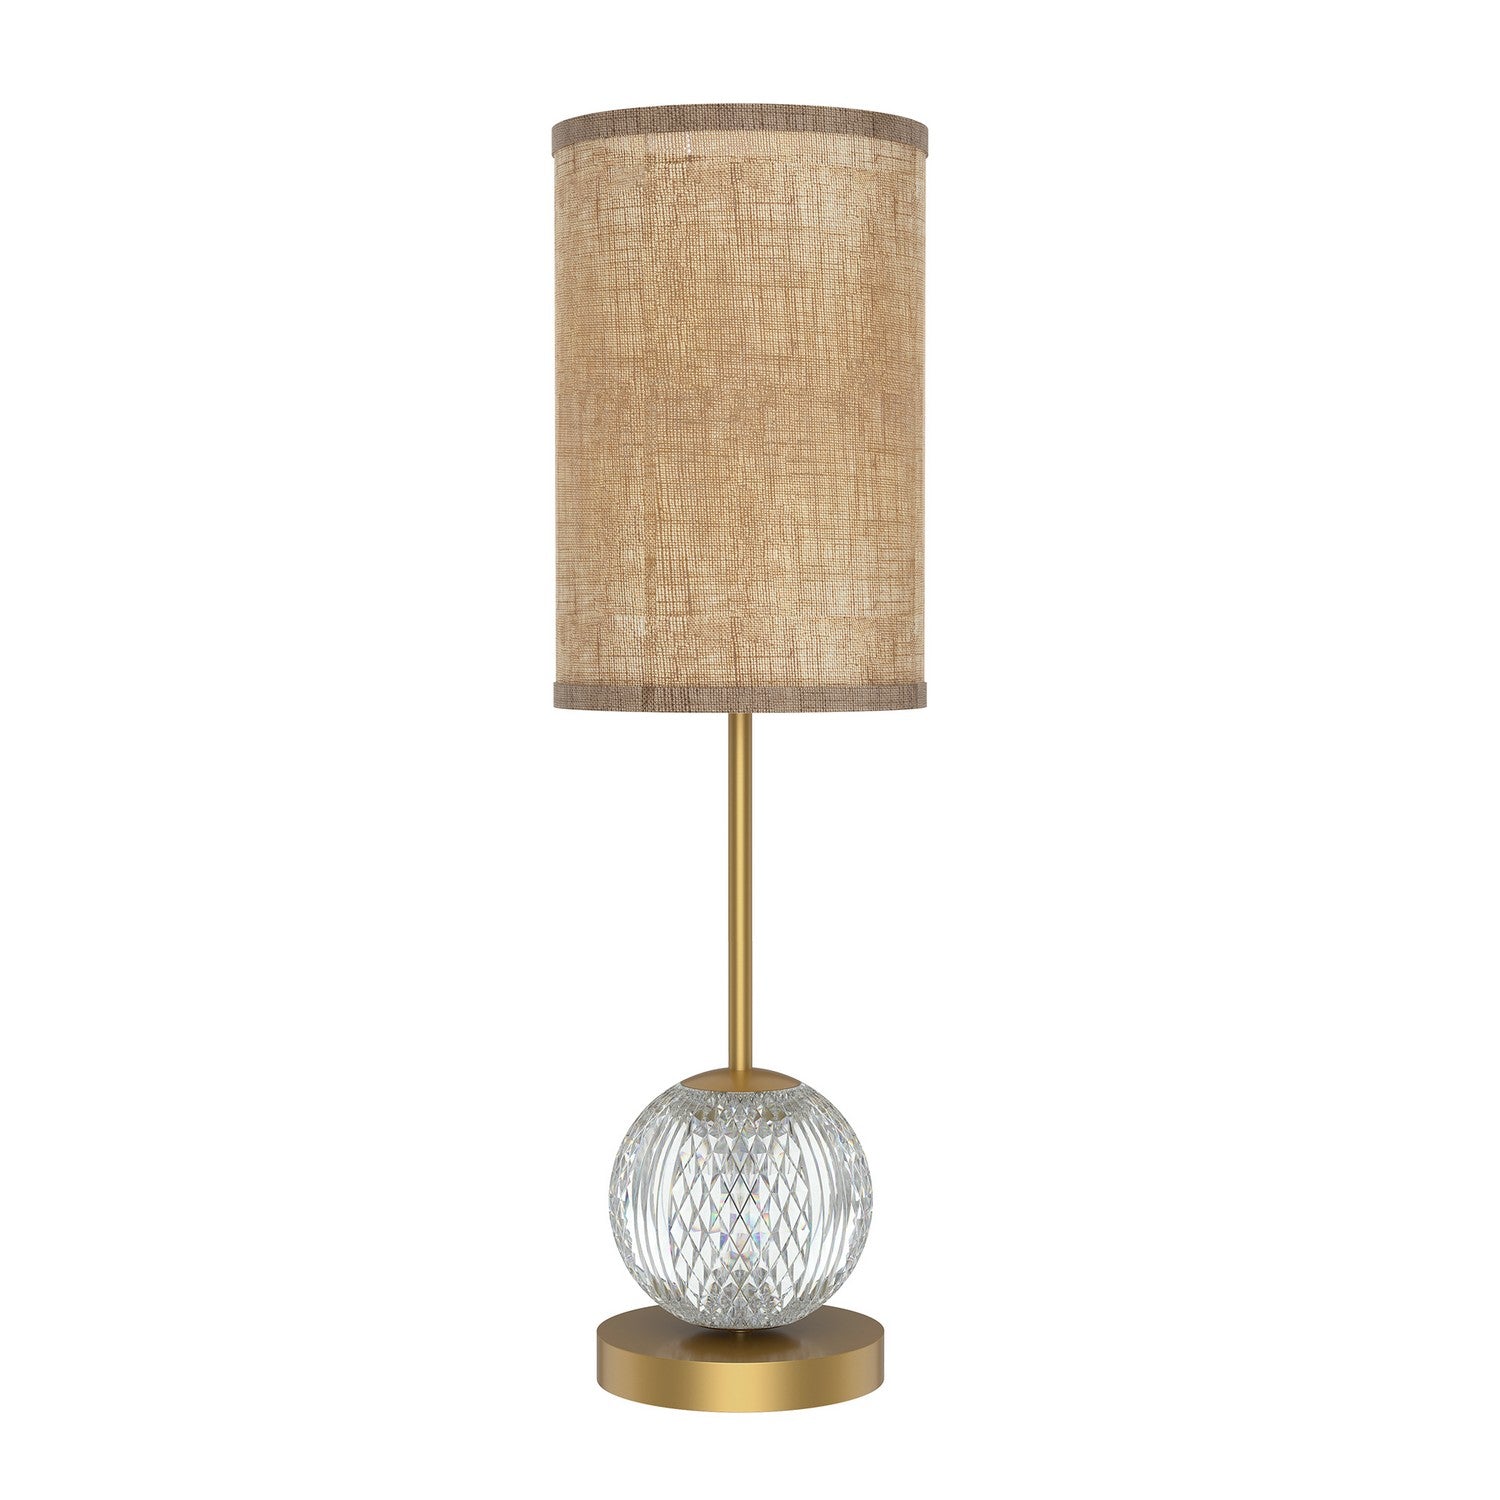 Alora Canada - LED Lamp - Marni - Natural Brass/White Linen|Polished Nickel/White Linen- Union Lighting Luminaires Decor